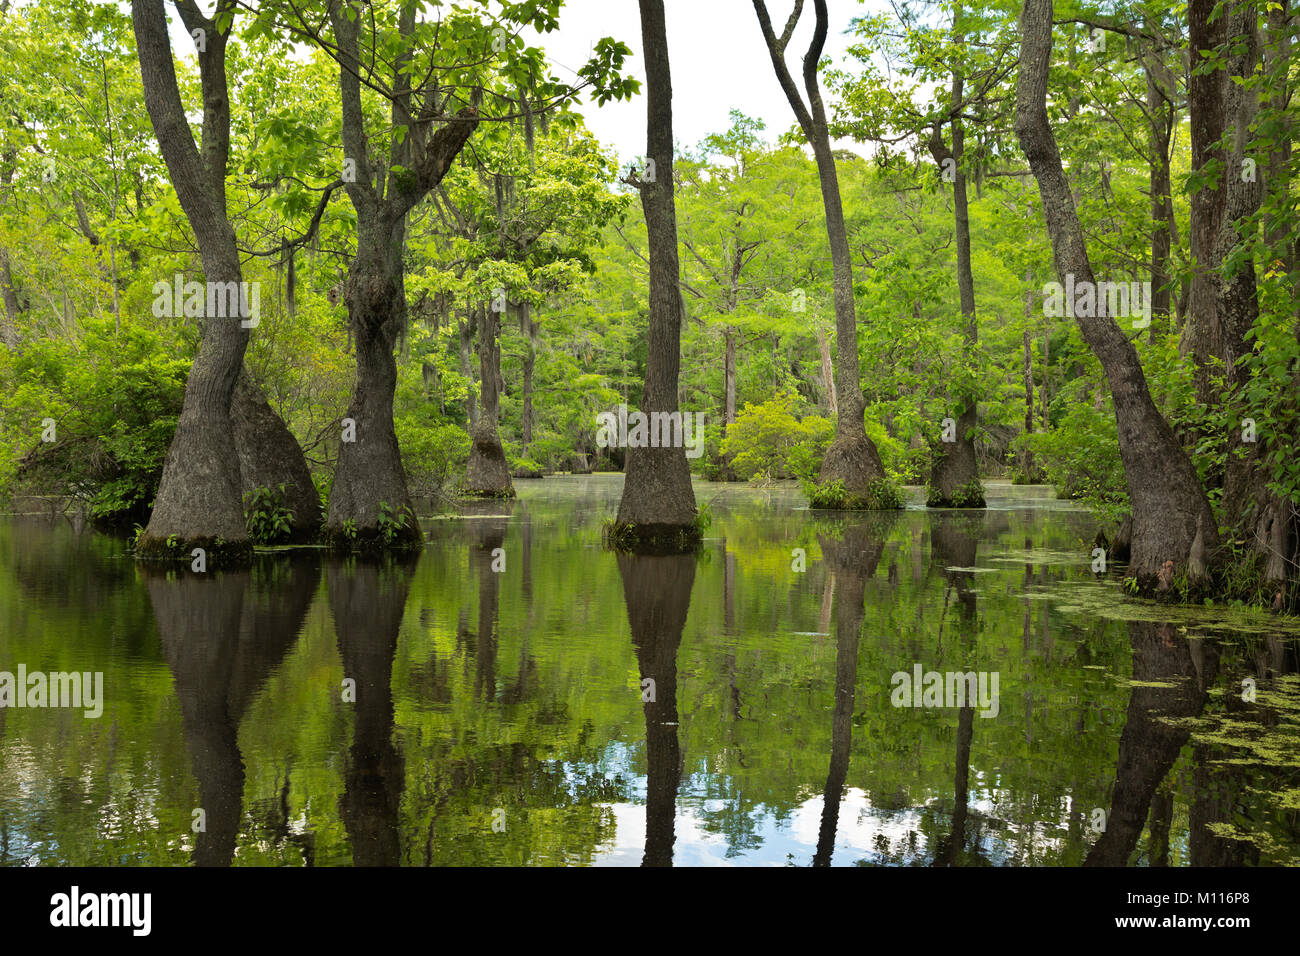 NC01450--00...CAROLINE DU NORD - arbres gracieux de la Cypress swamp se reflétant dans les eaux calmes de l'étang de la Marine marchande Marine marchande dans l'étang Banque D'Images